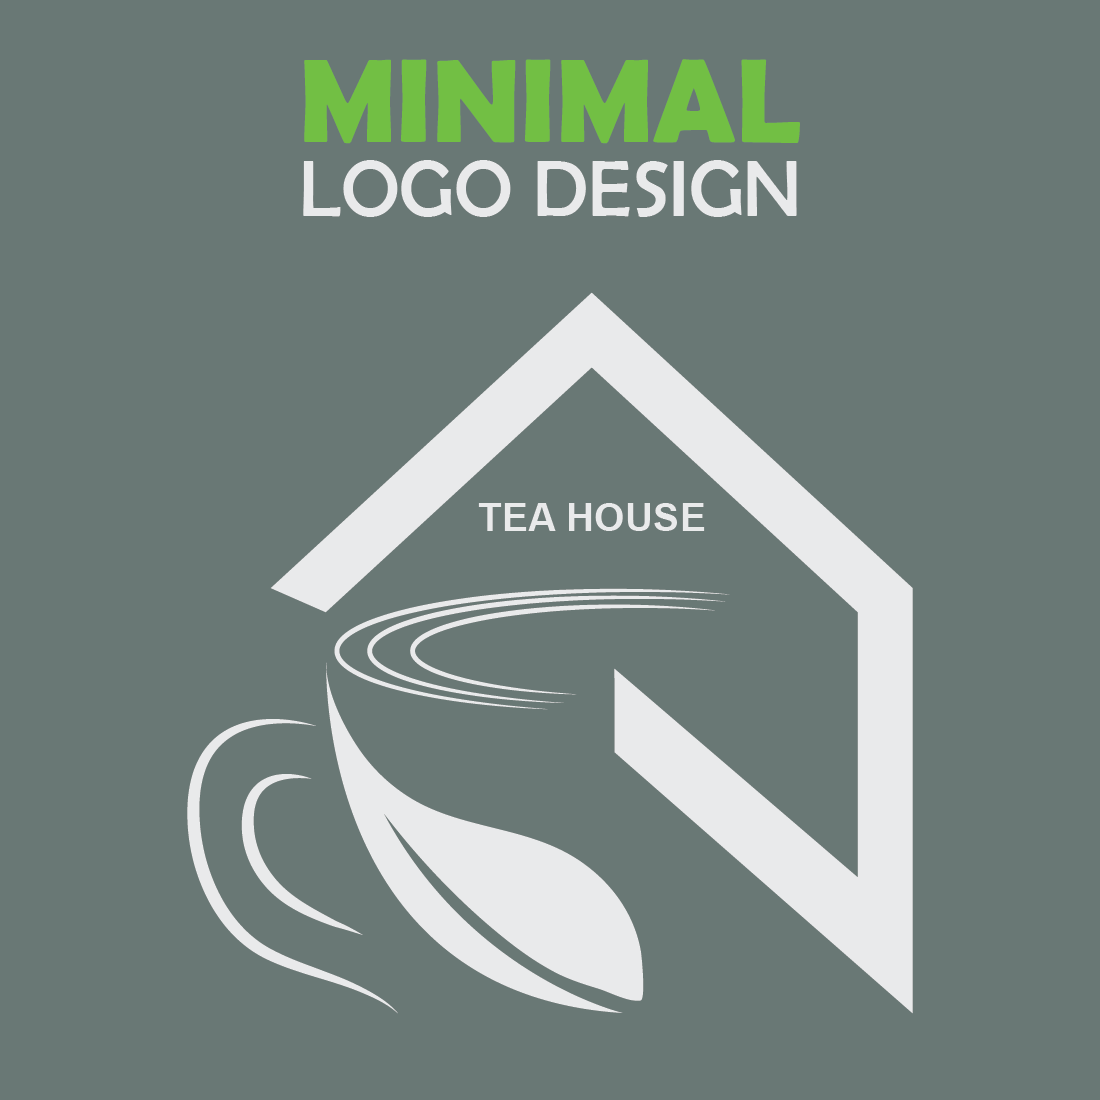 unique and professional tea shop or tea house logo design template preview image.